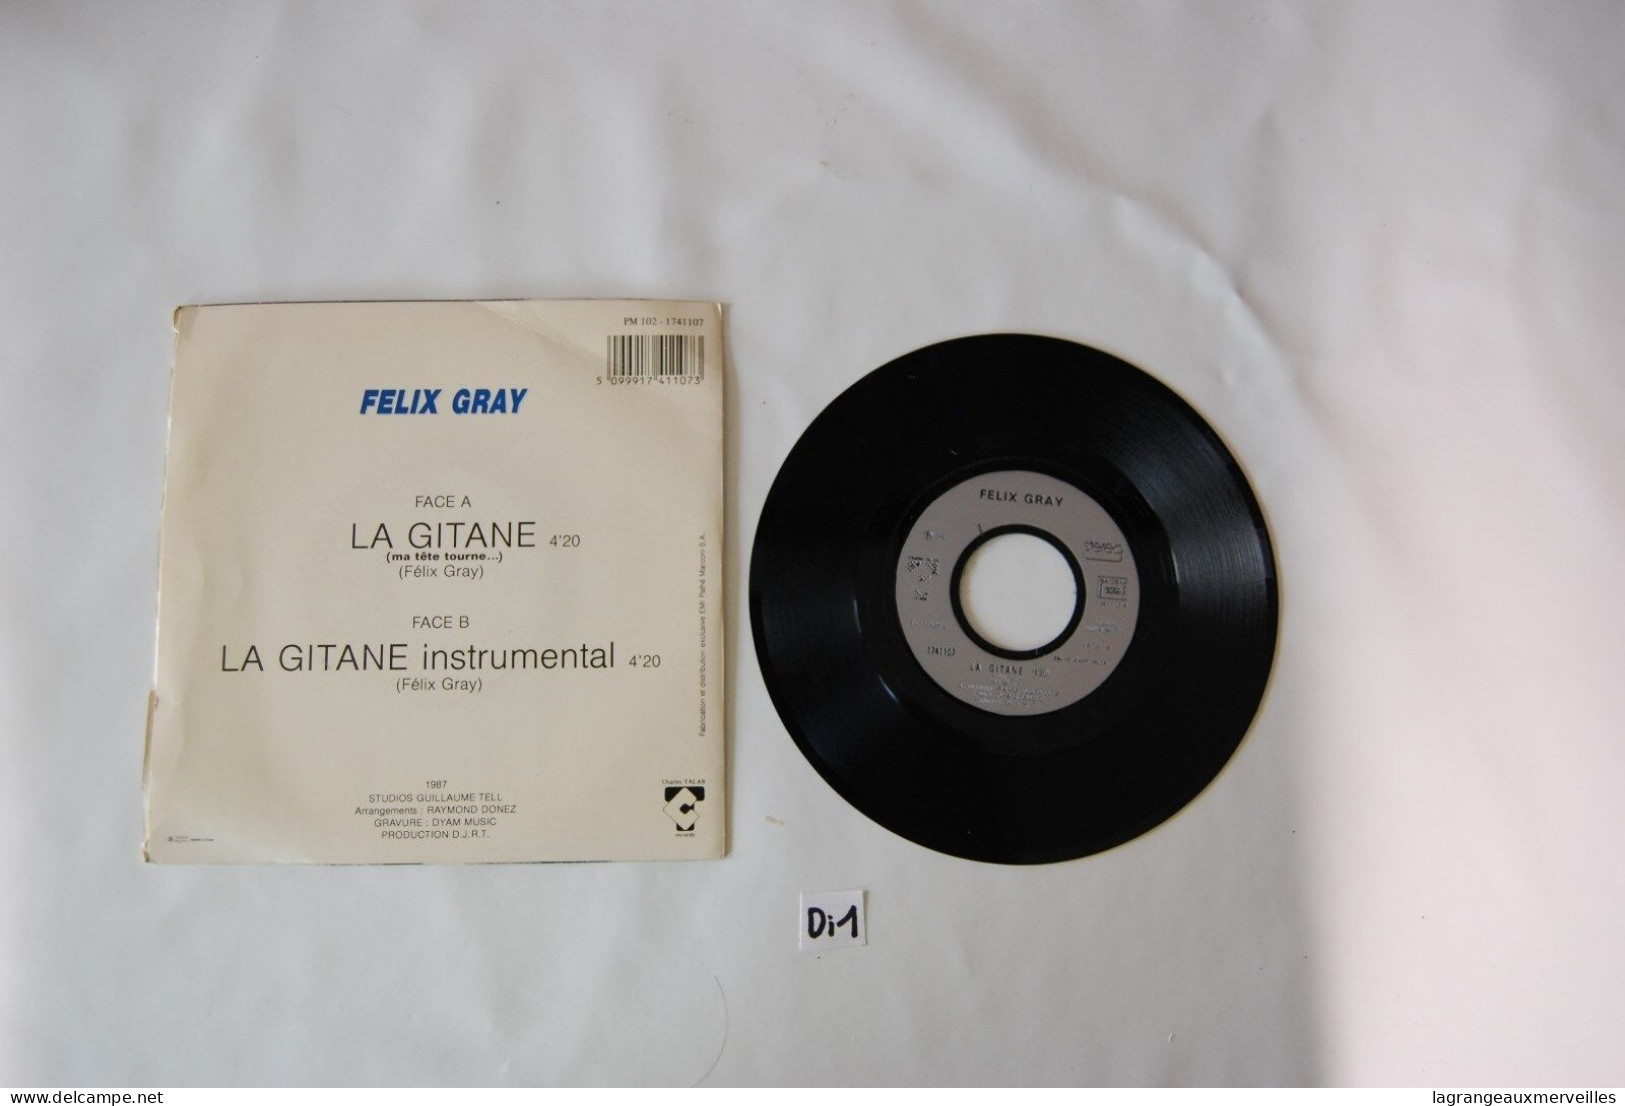 Di1- Vinyl 45 T - Felix Gray - La Gitane - Other - French Music